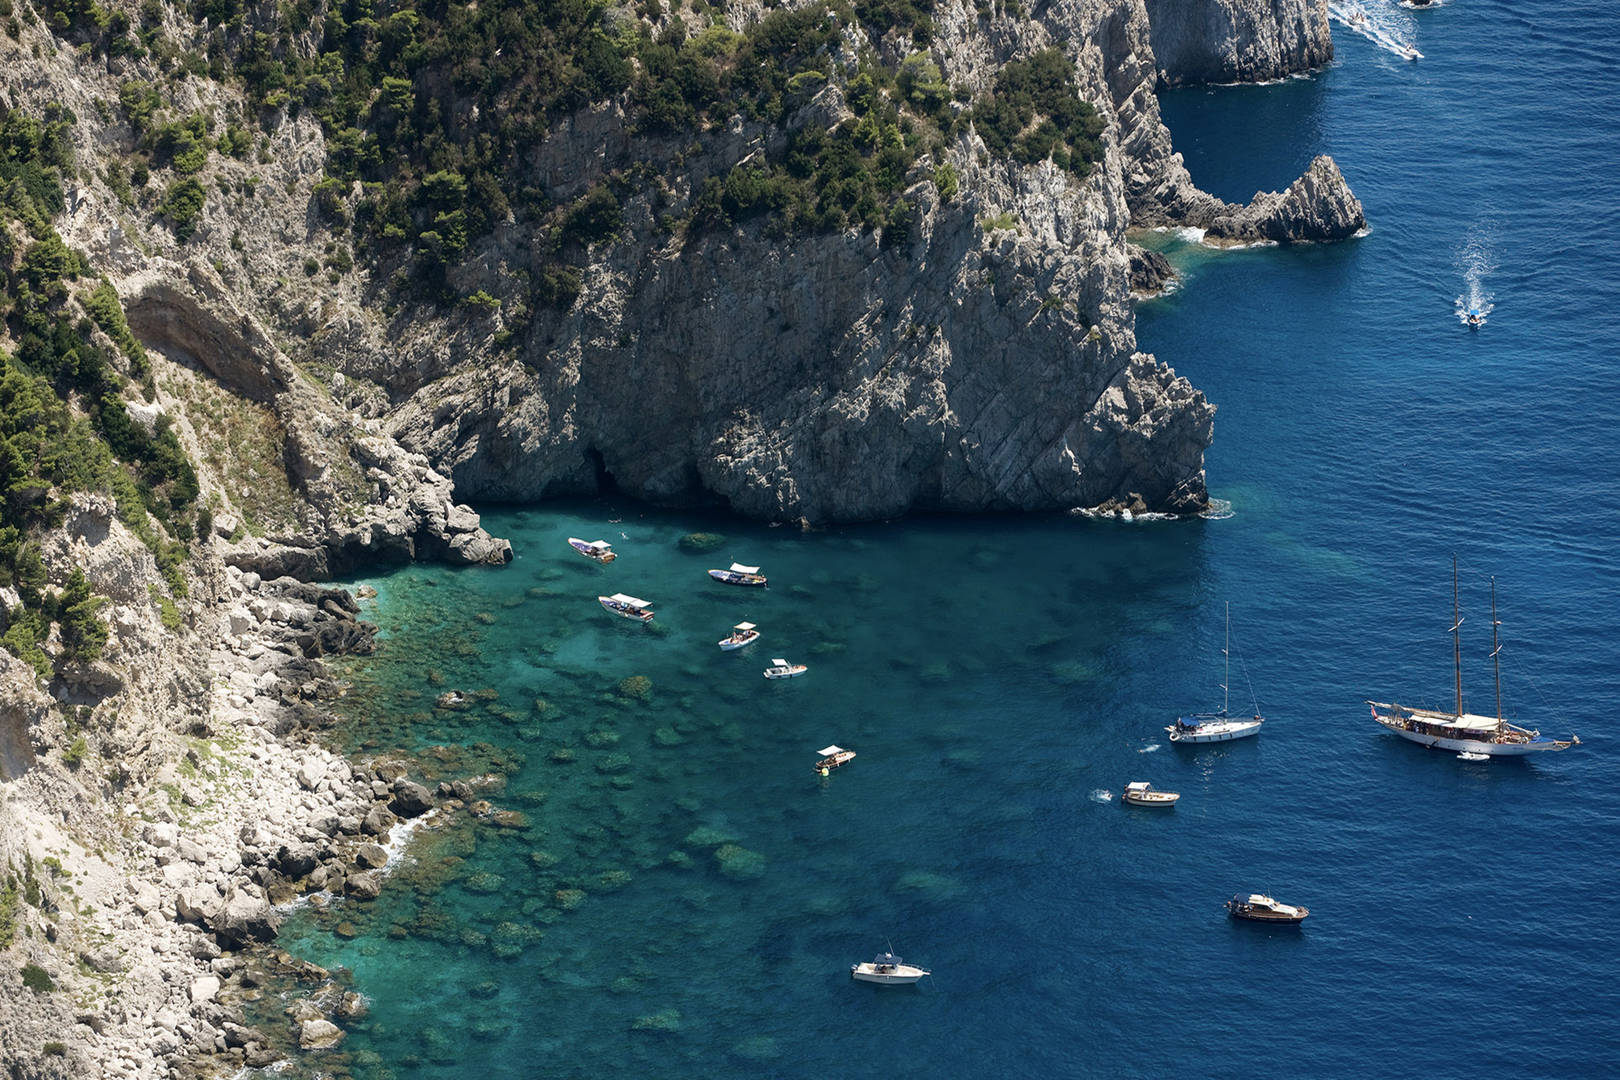 Blue Grotto, Capri: Inside Italy's incredible electric blue sea cave